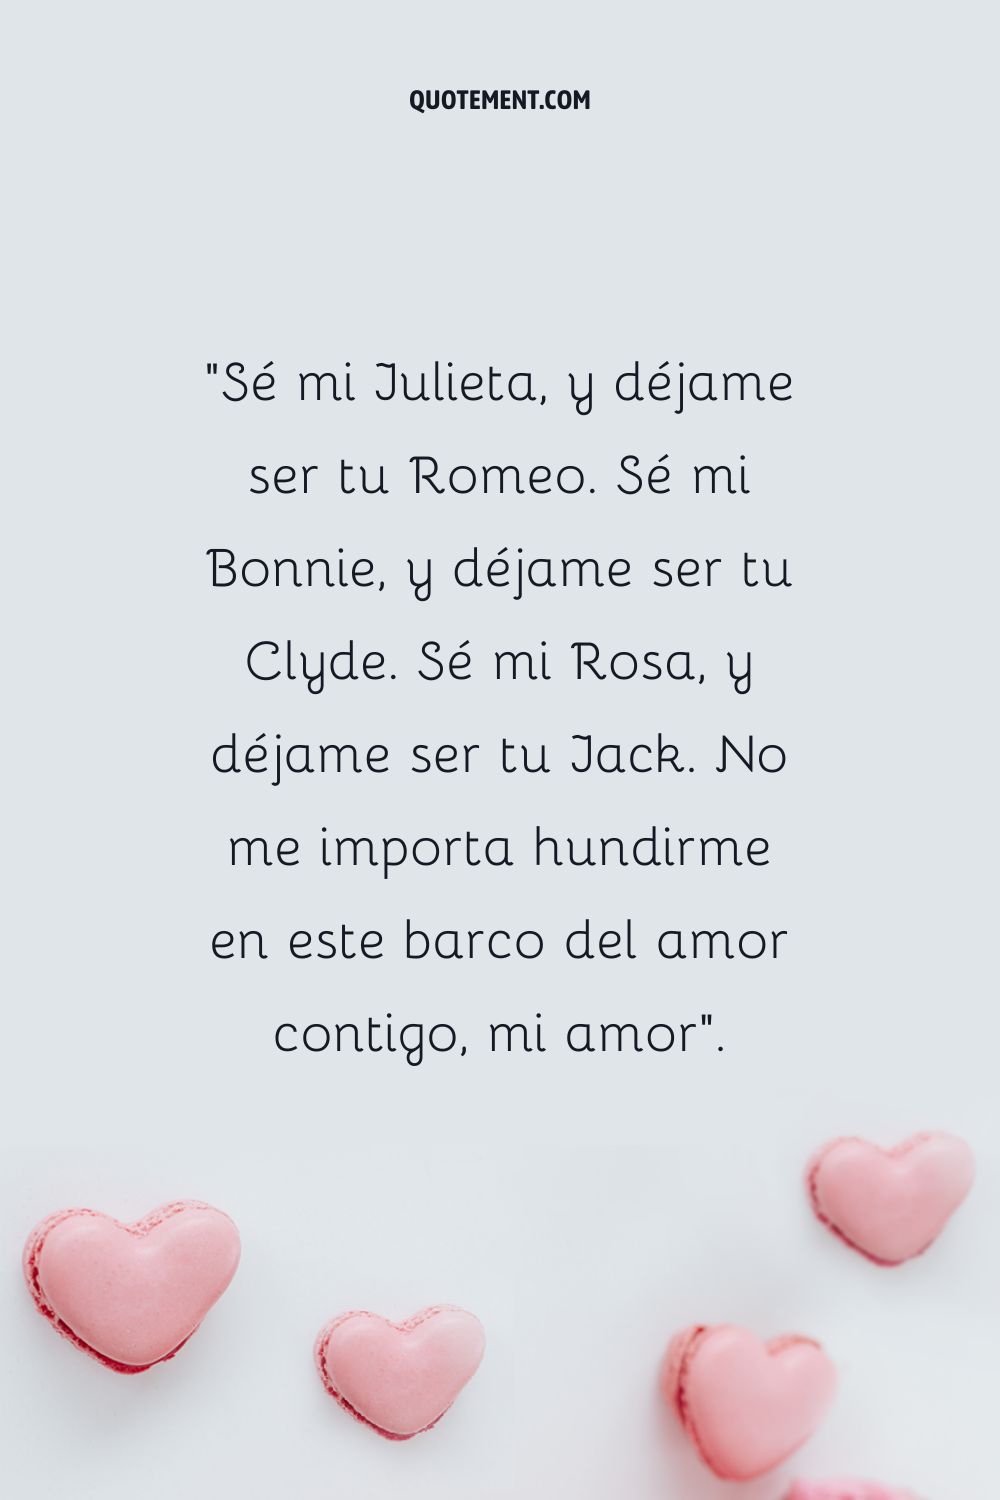 "Sé mi Julieta, y déjame ser tu Romeo. Sé mi Bonnie, y déjame ser tu Clyde. Sé mi Rosa, y déjame ser tu Jack. No me importa hundirme en este barco del amor contigo, mi amor".